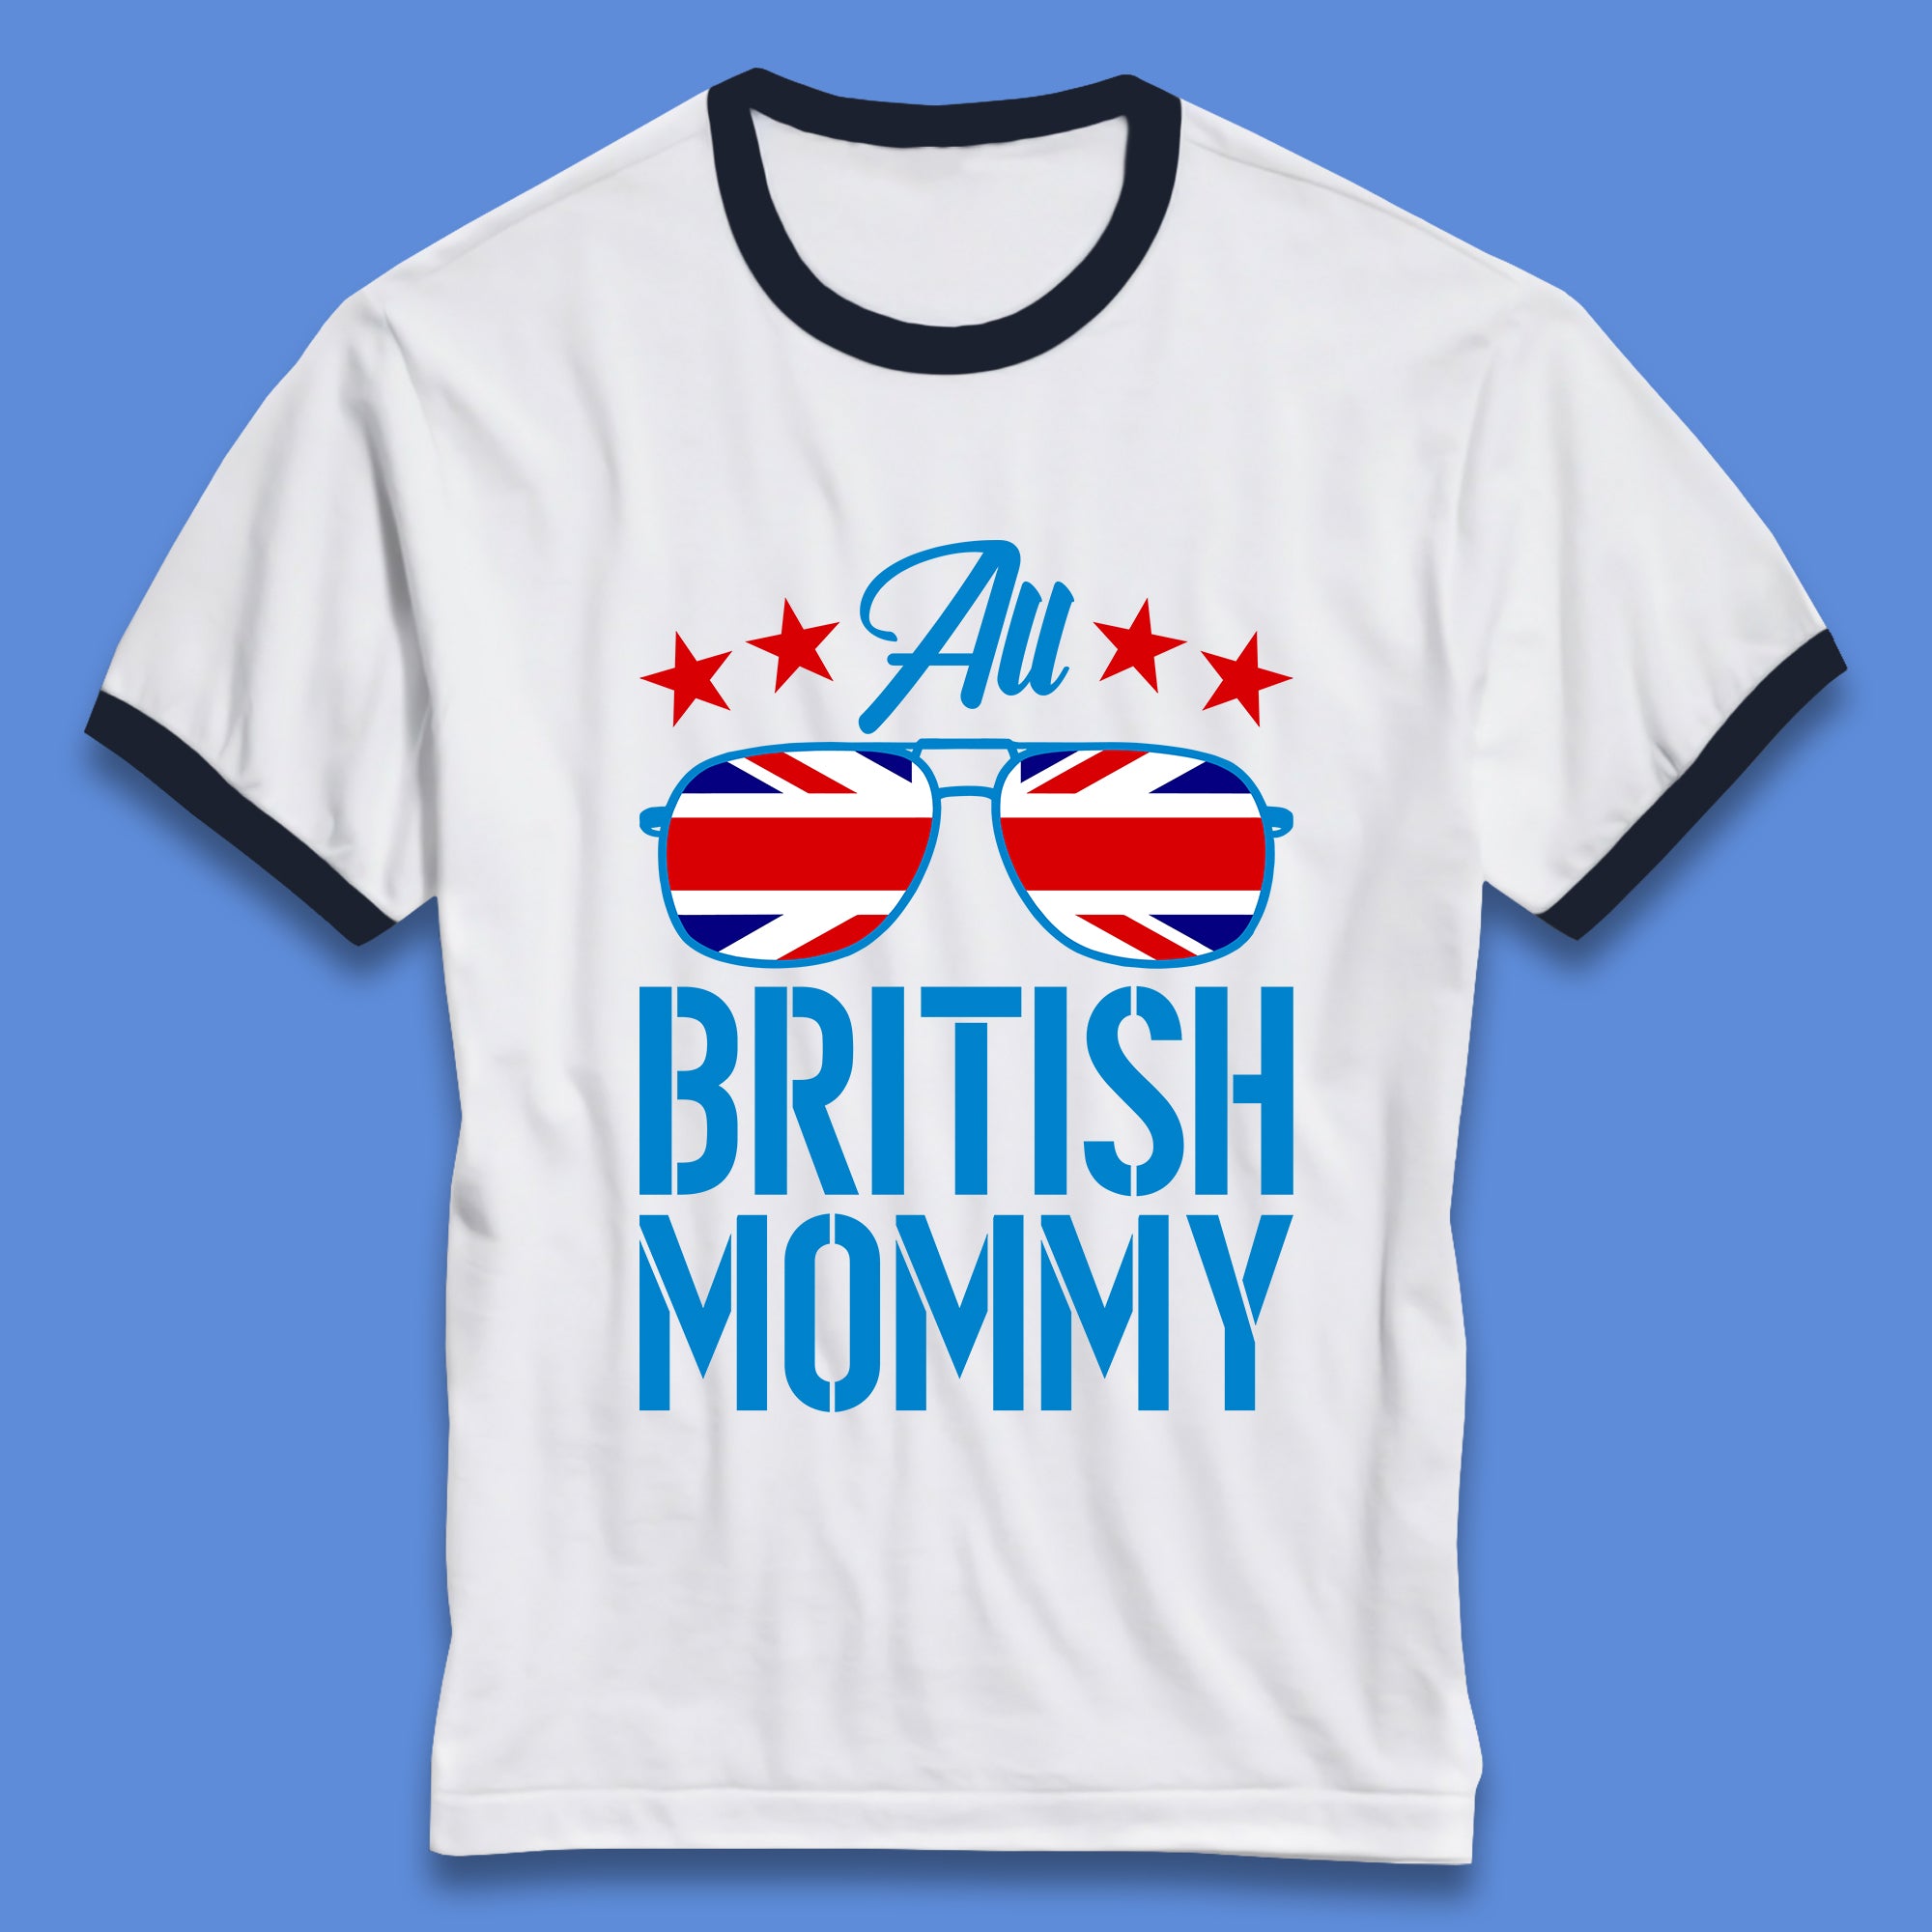 British Mommy Ringer T-Shirt